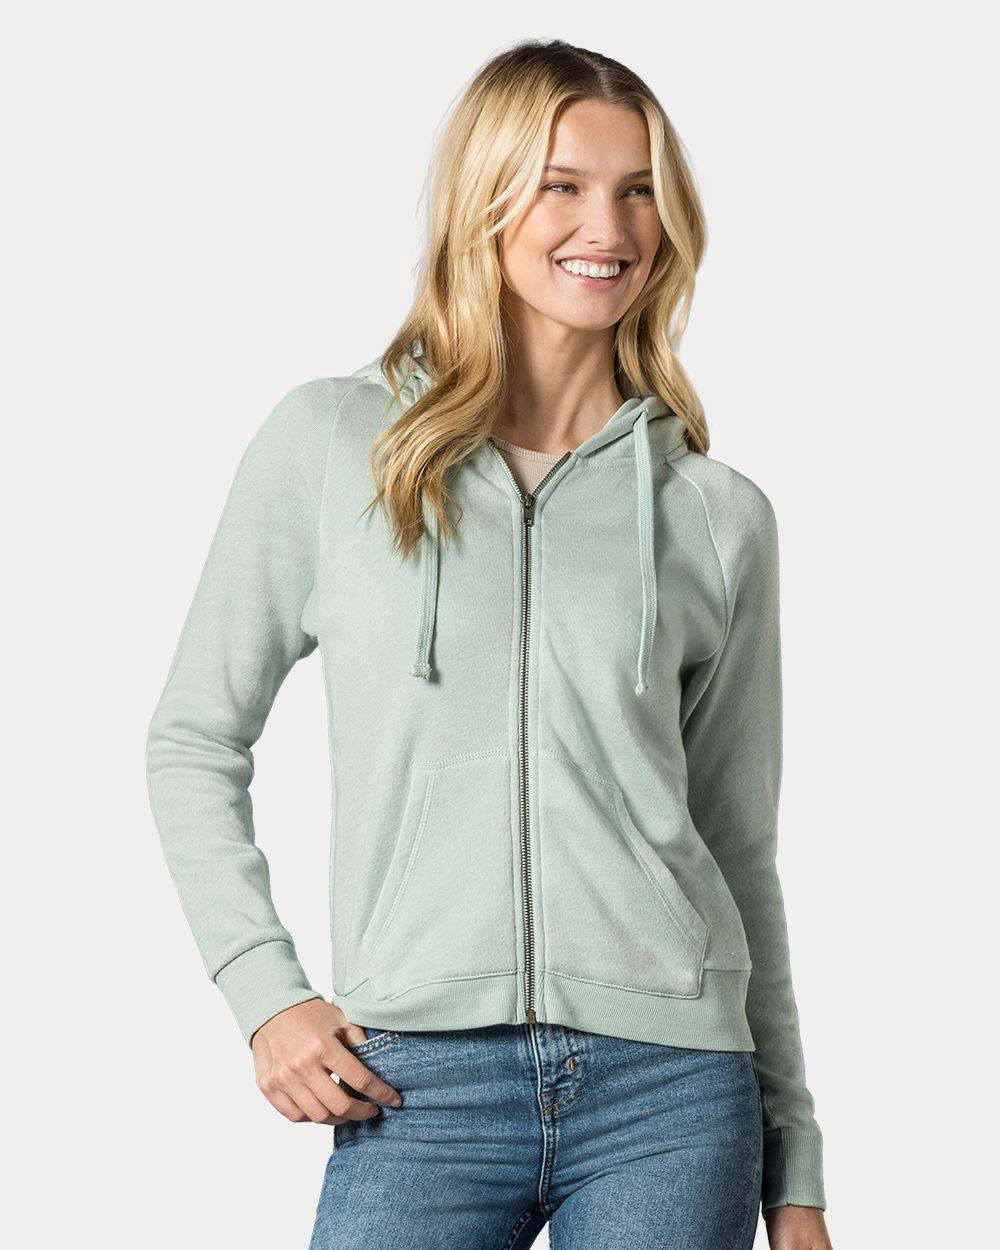 Image for Women's Stockton Angel Fleece Full-Zip Hooded Sweatshirt - W20150